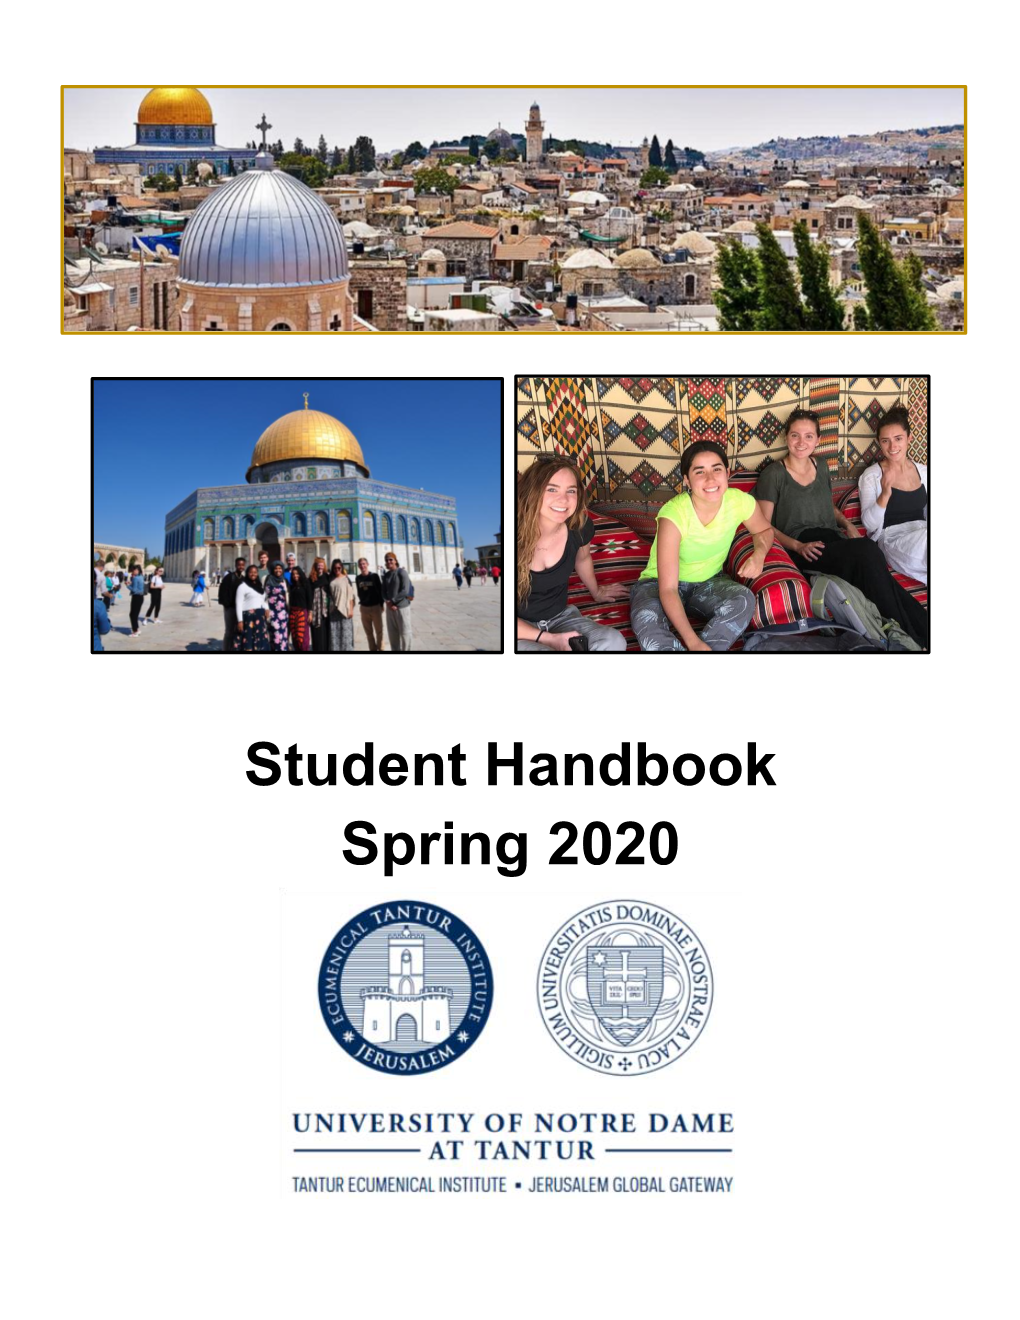 Student Handbook Spring 2020